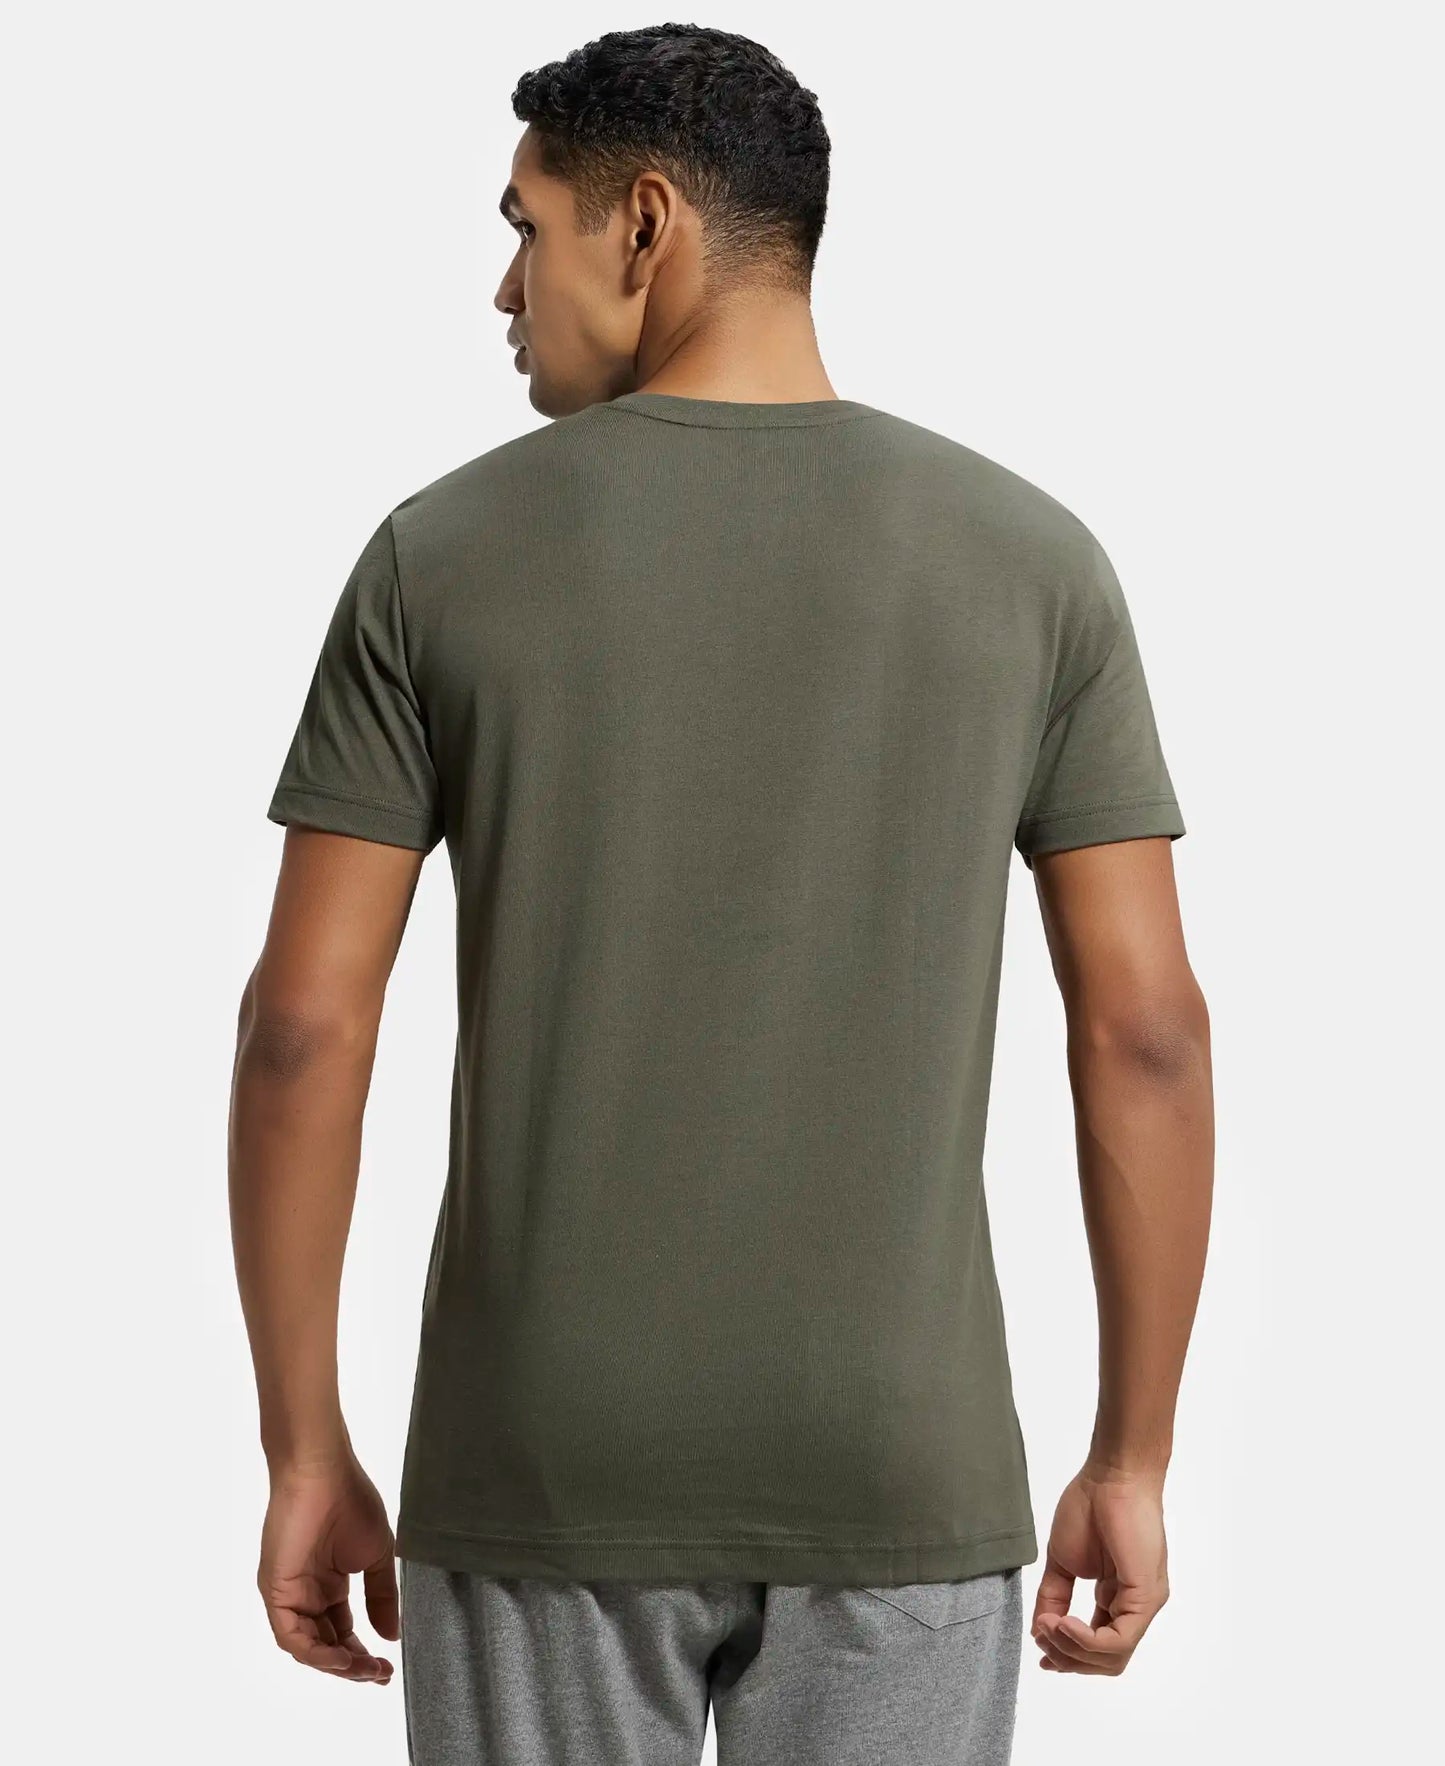 Super Combed Cotton Rich Solid V Neck Half Sleeve T-Shirt  - Deep Olive-3